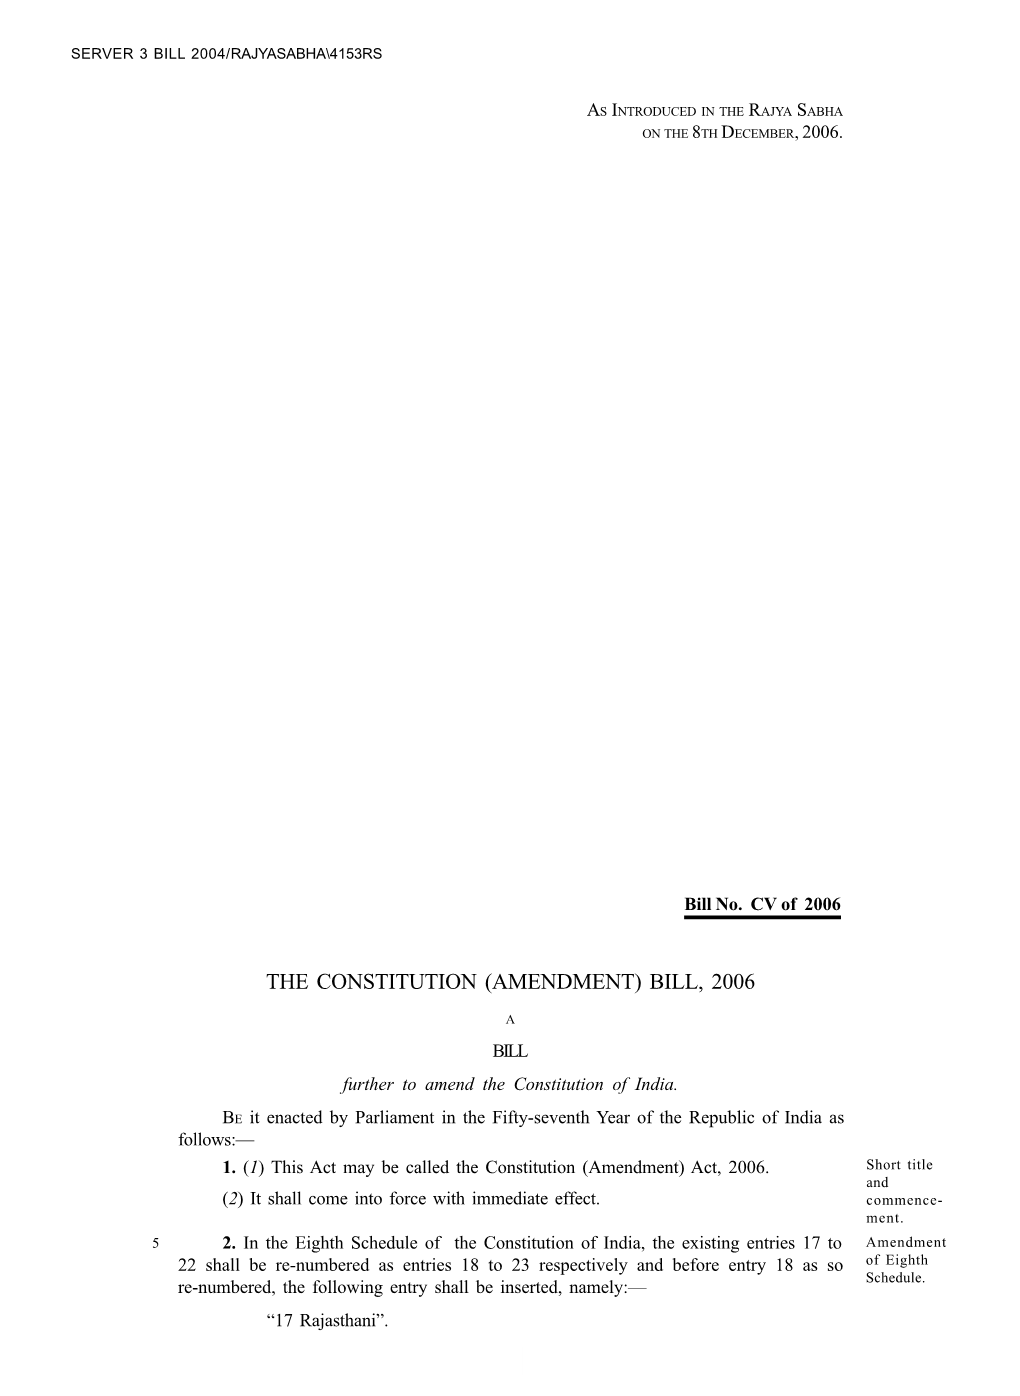 The Constitution (Amendment) Bill, 2006